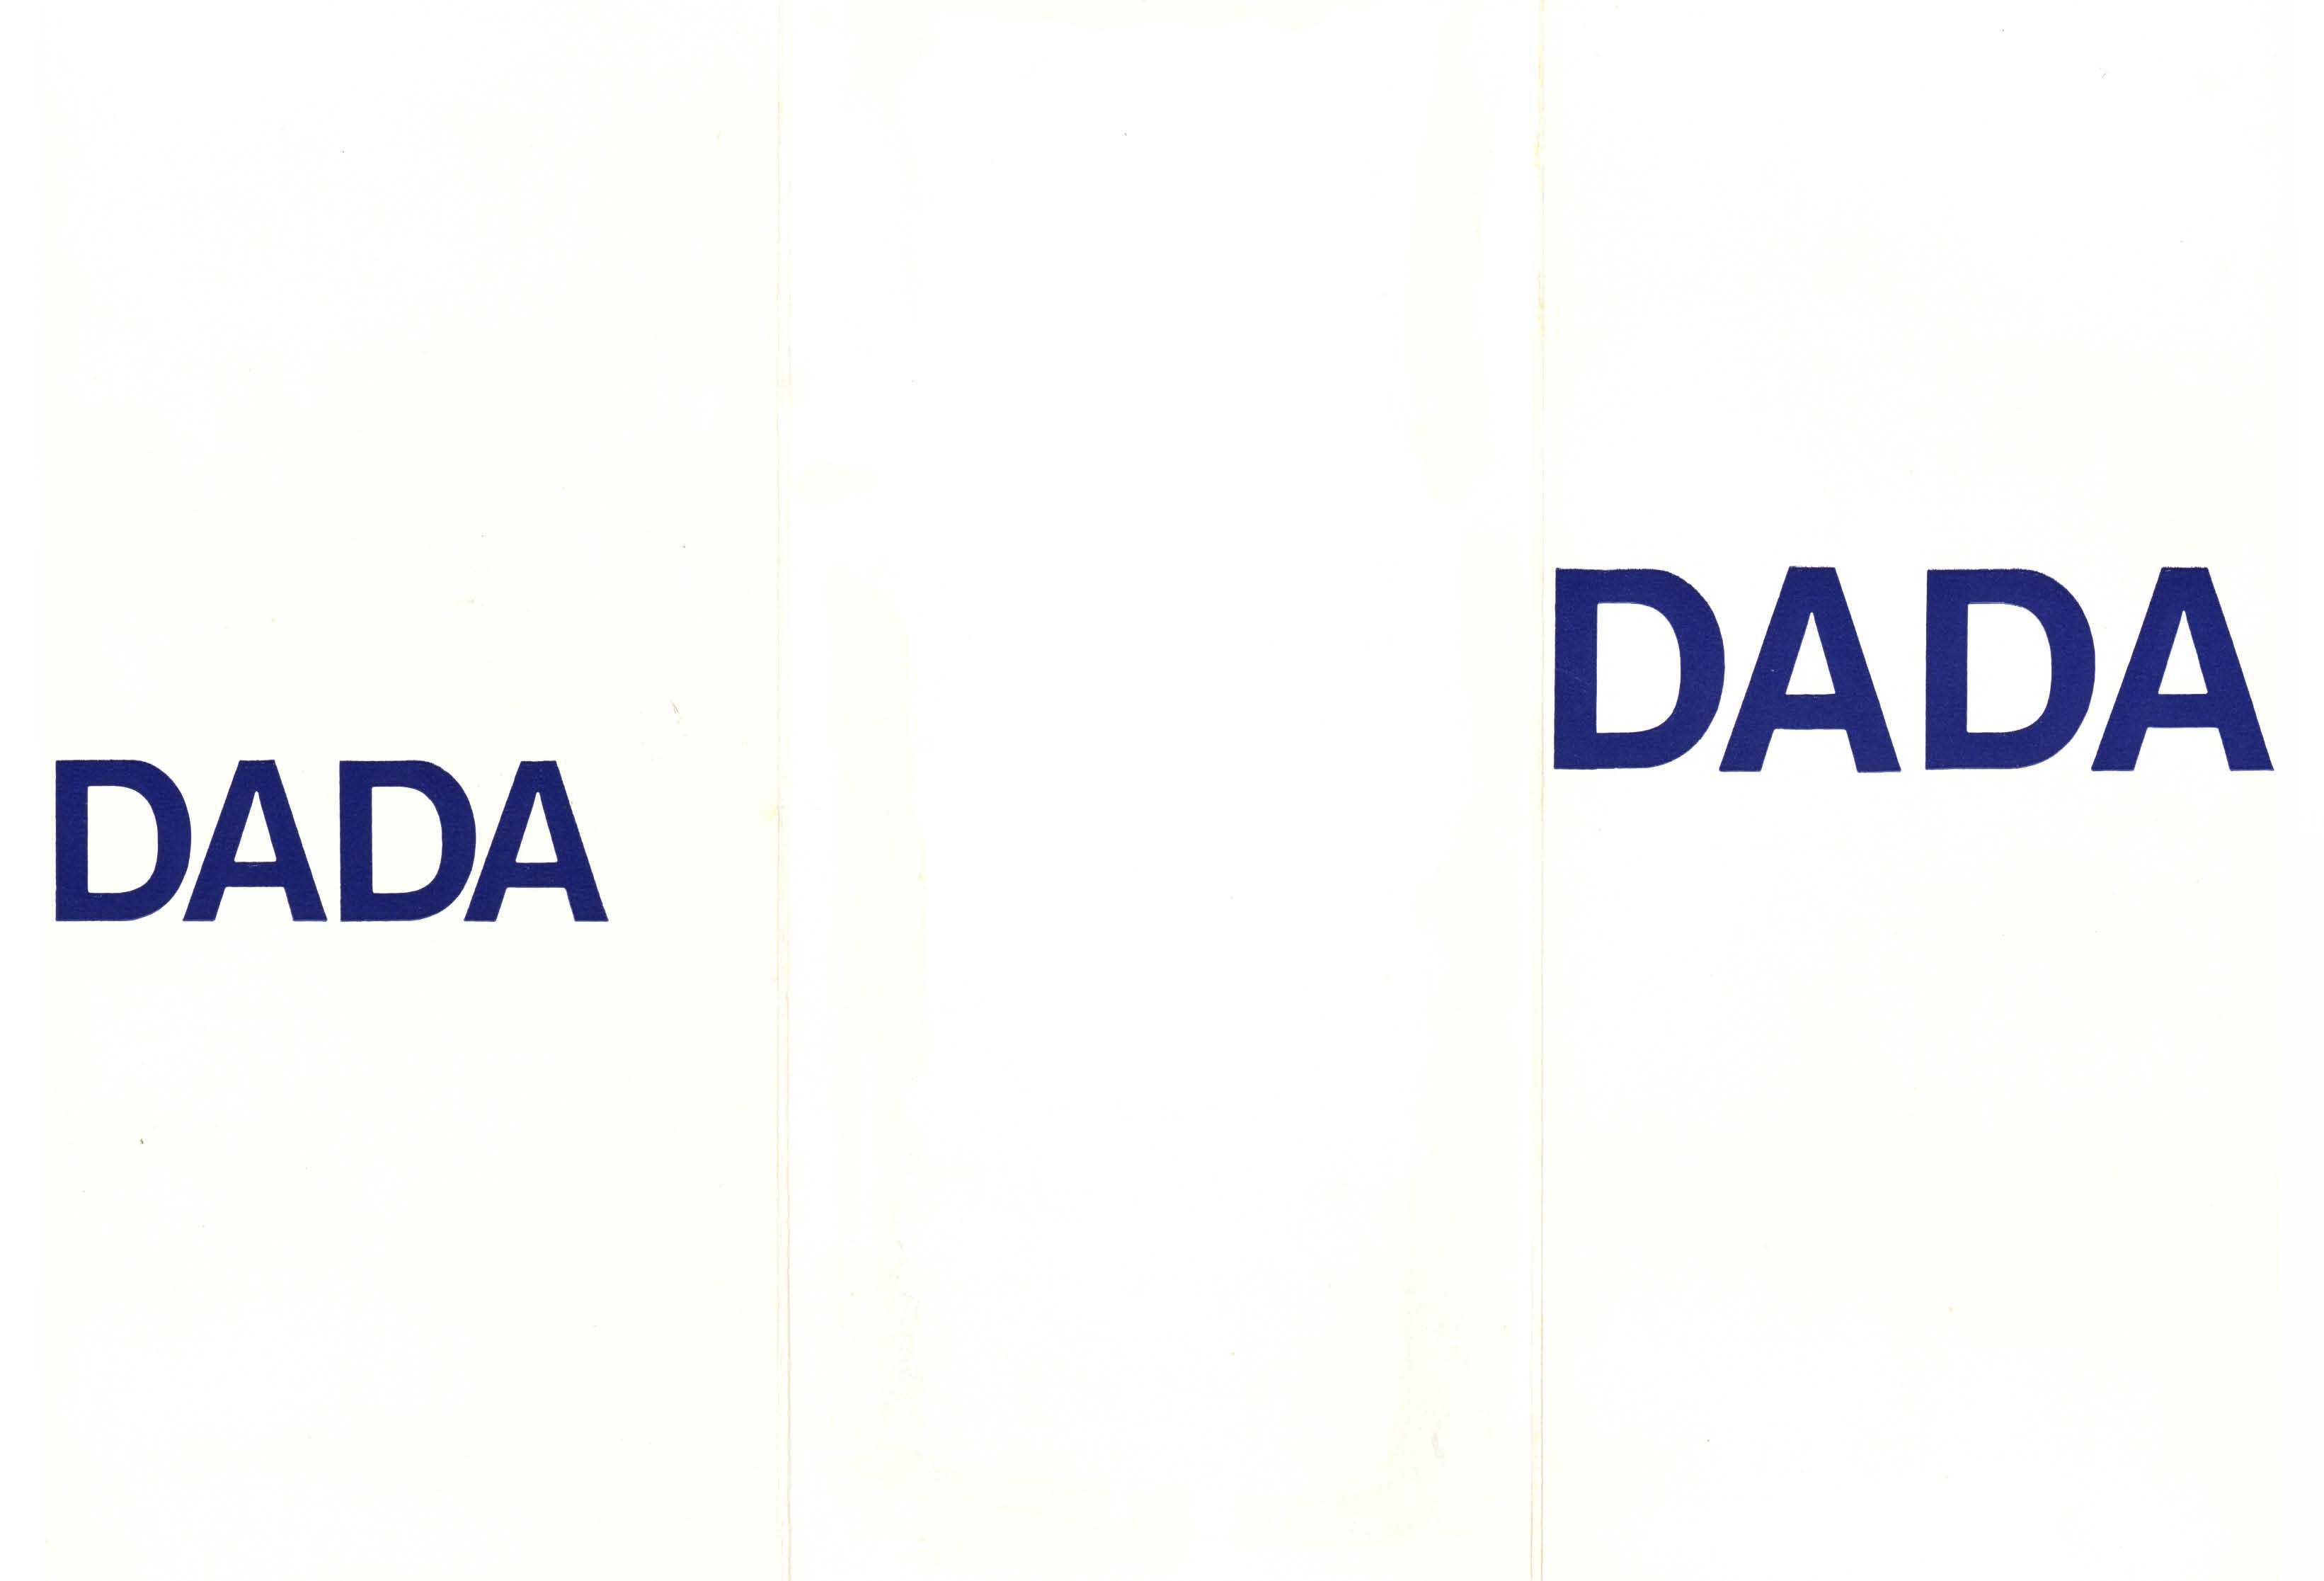 Dada, 1916 – 1966